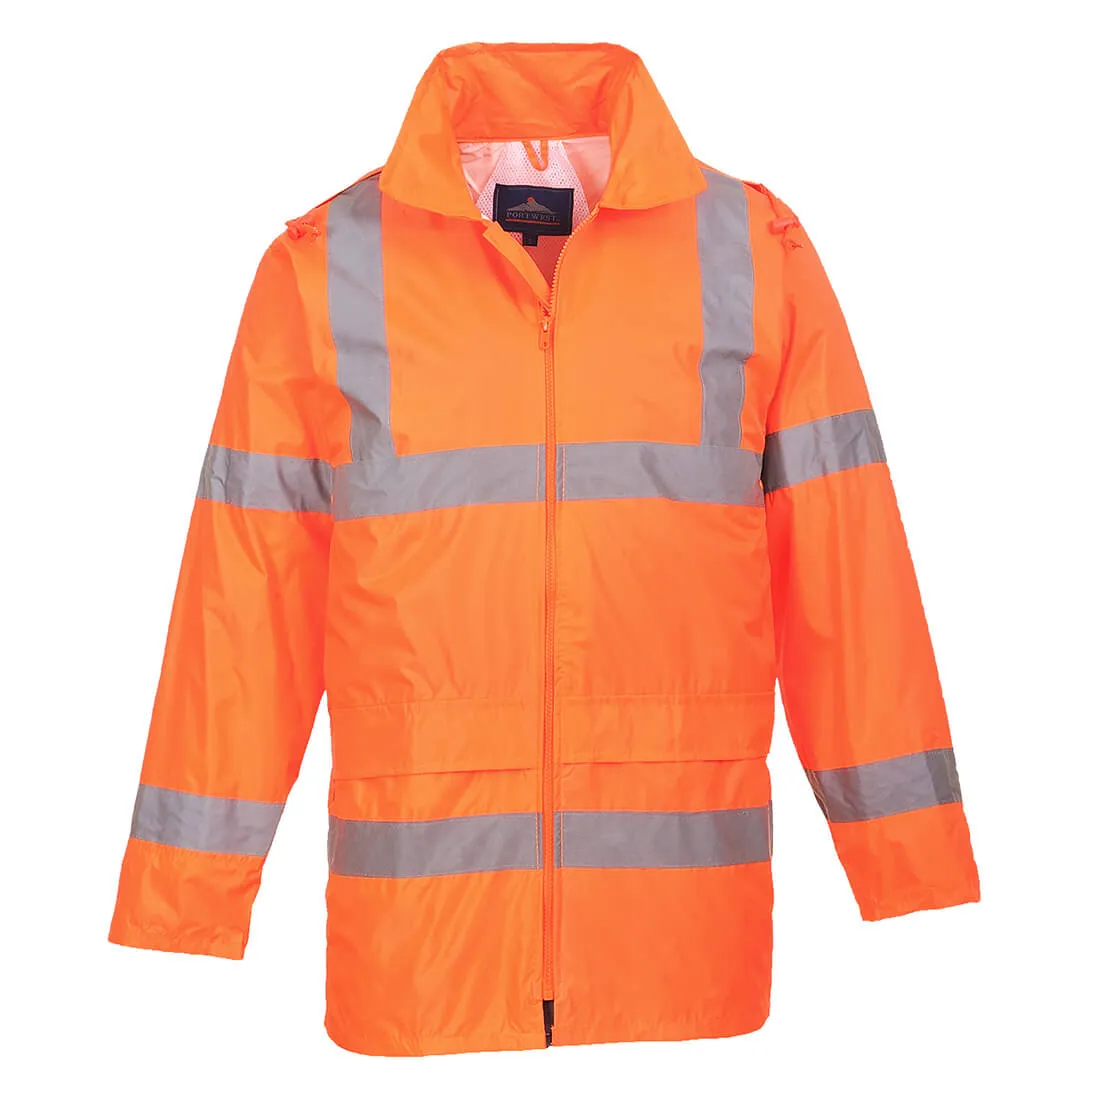 Portwest Hi Vis Rain Jacket - Orange, XL